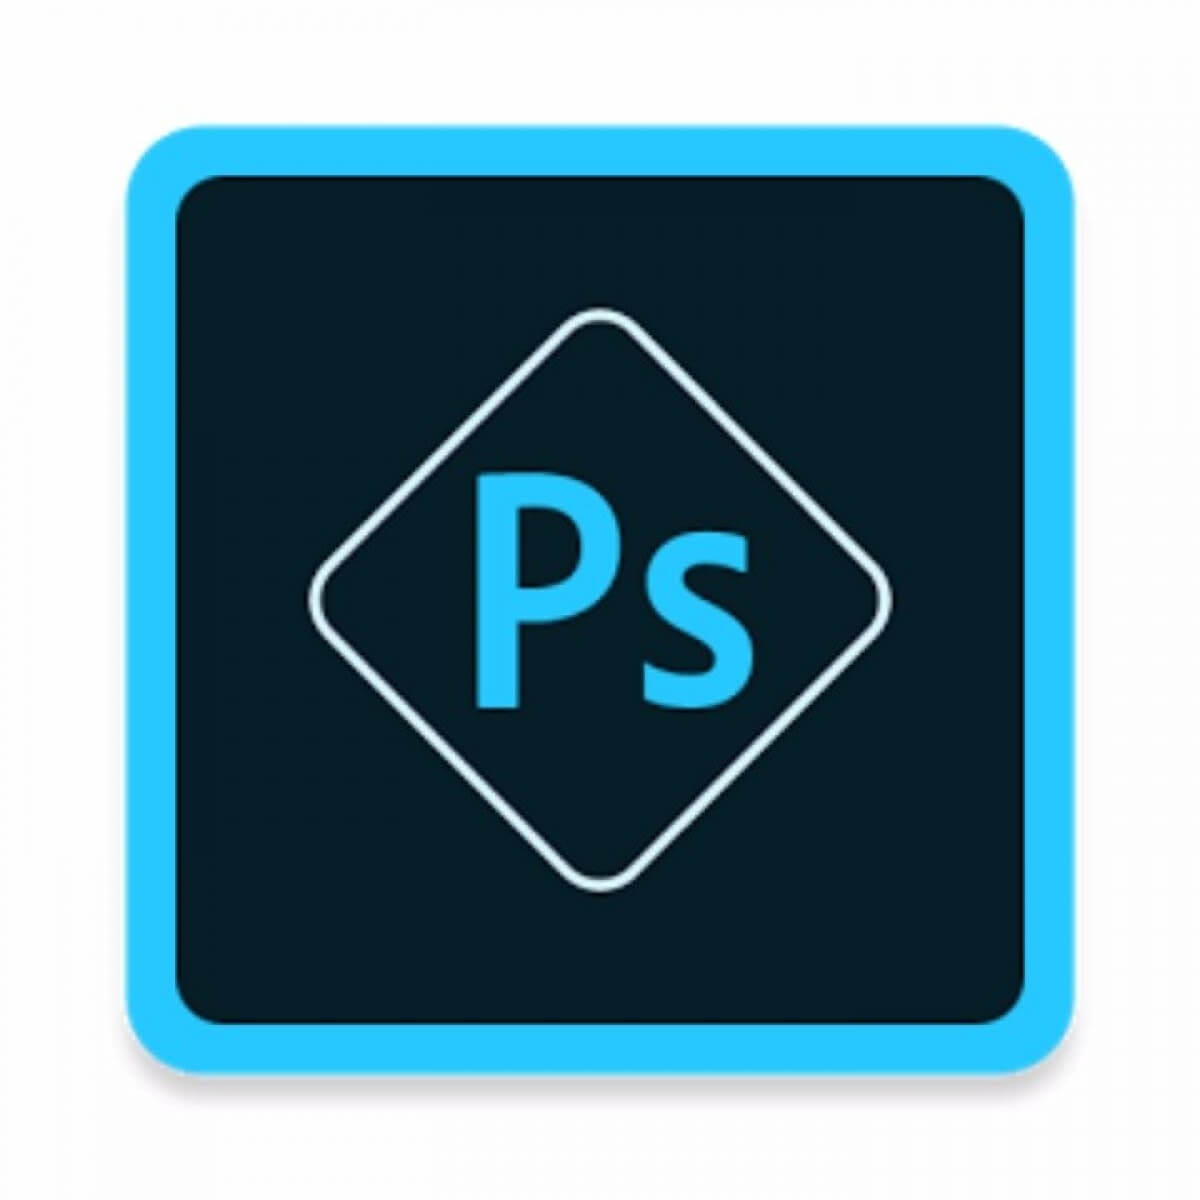 Adobe Photoshop for PC Windows XP/7/8/8.1/10 Free Download